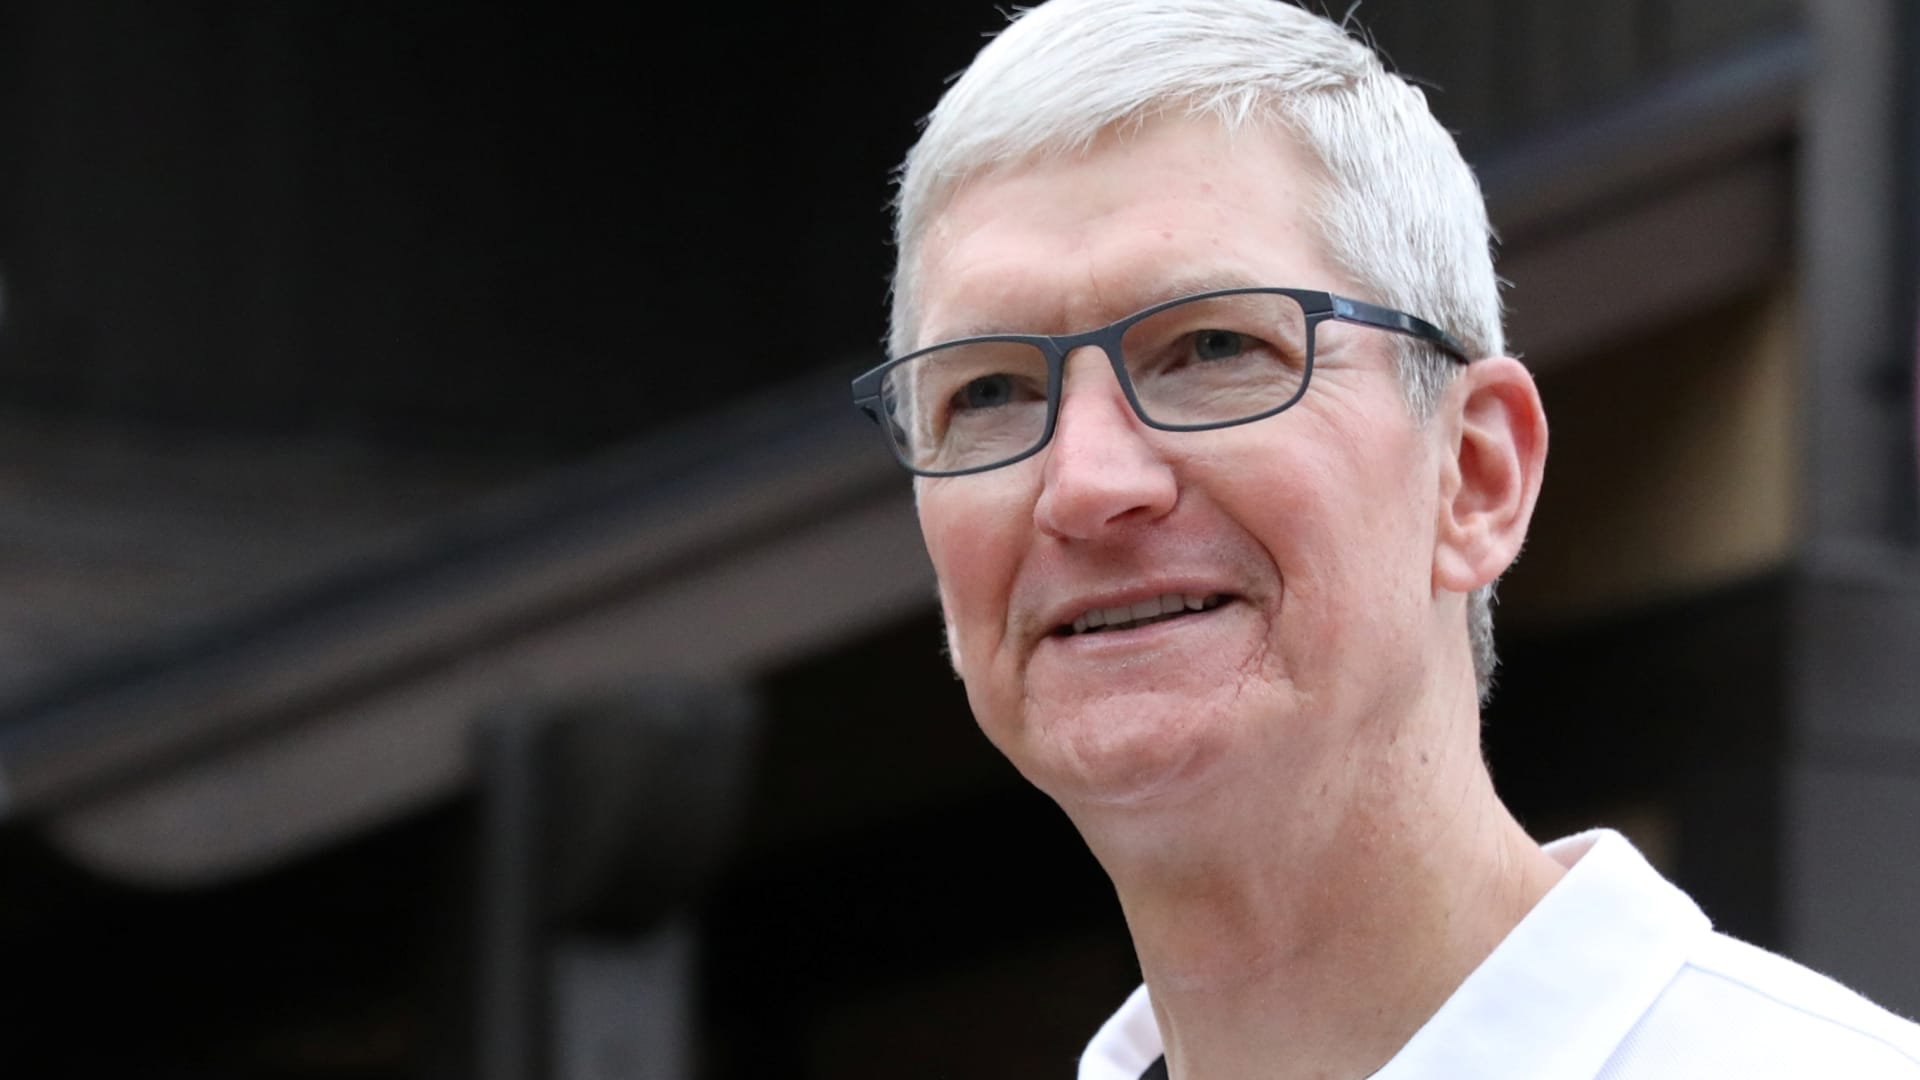 Apple spent more than it ever has on lobbying as antitrust threats loom